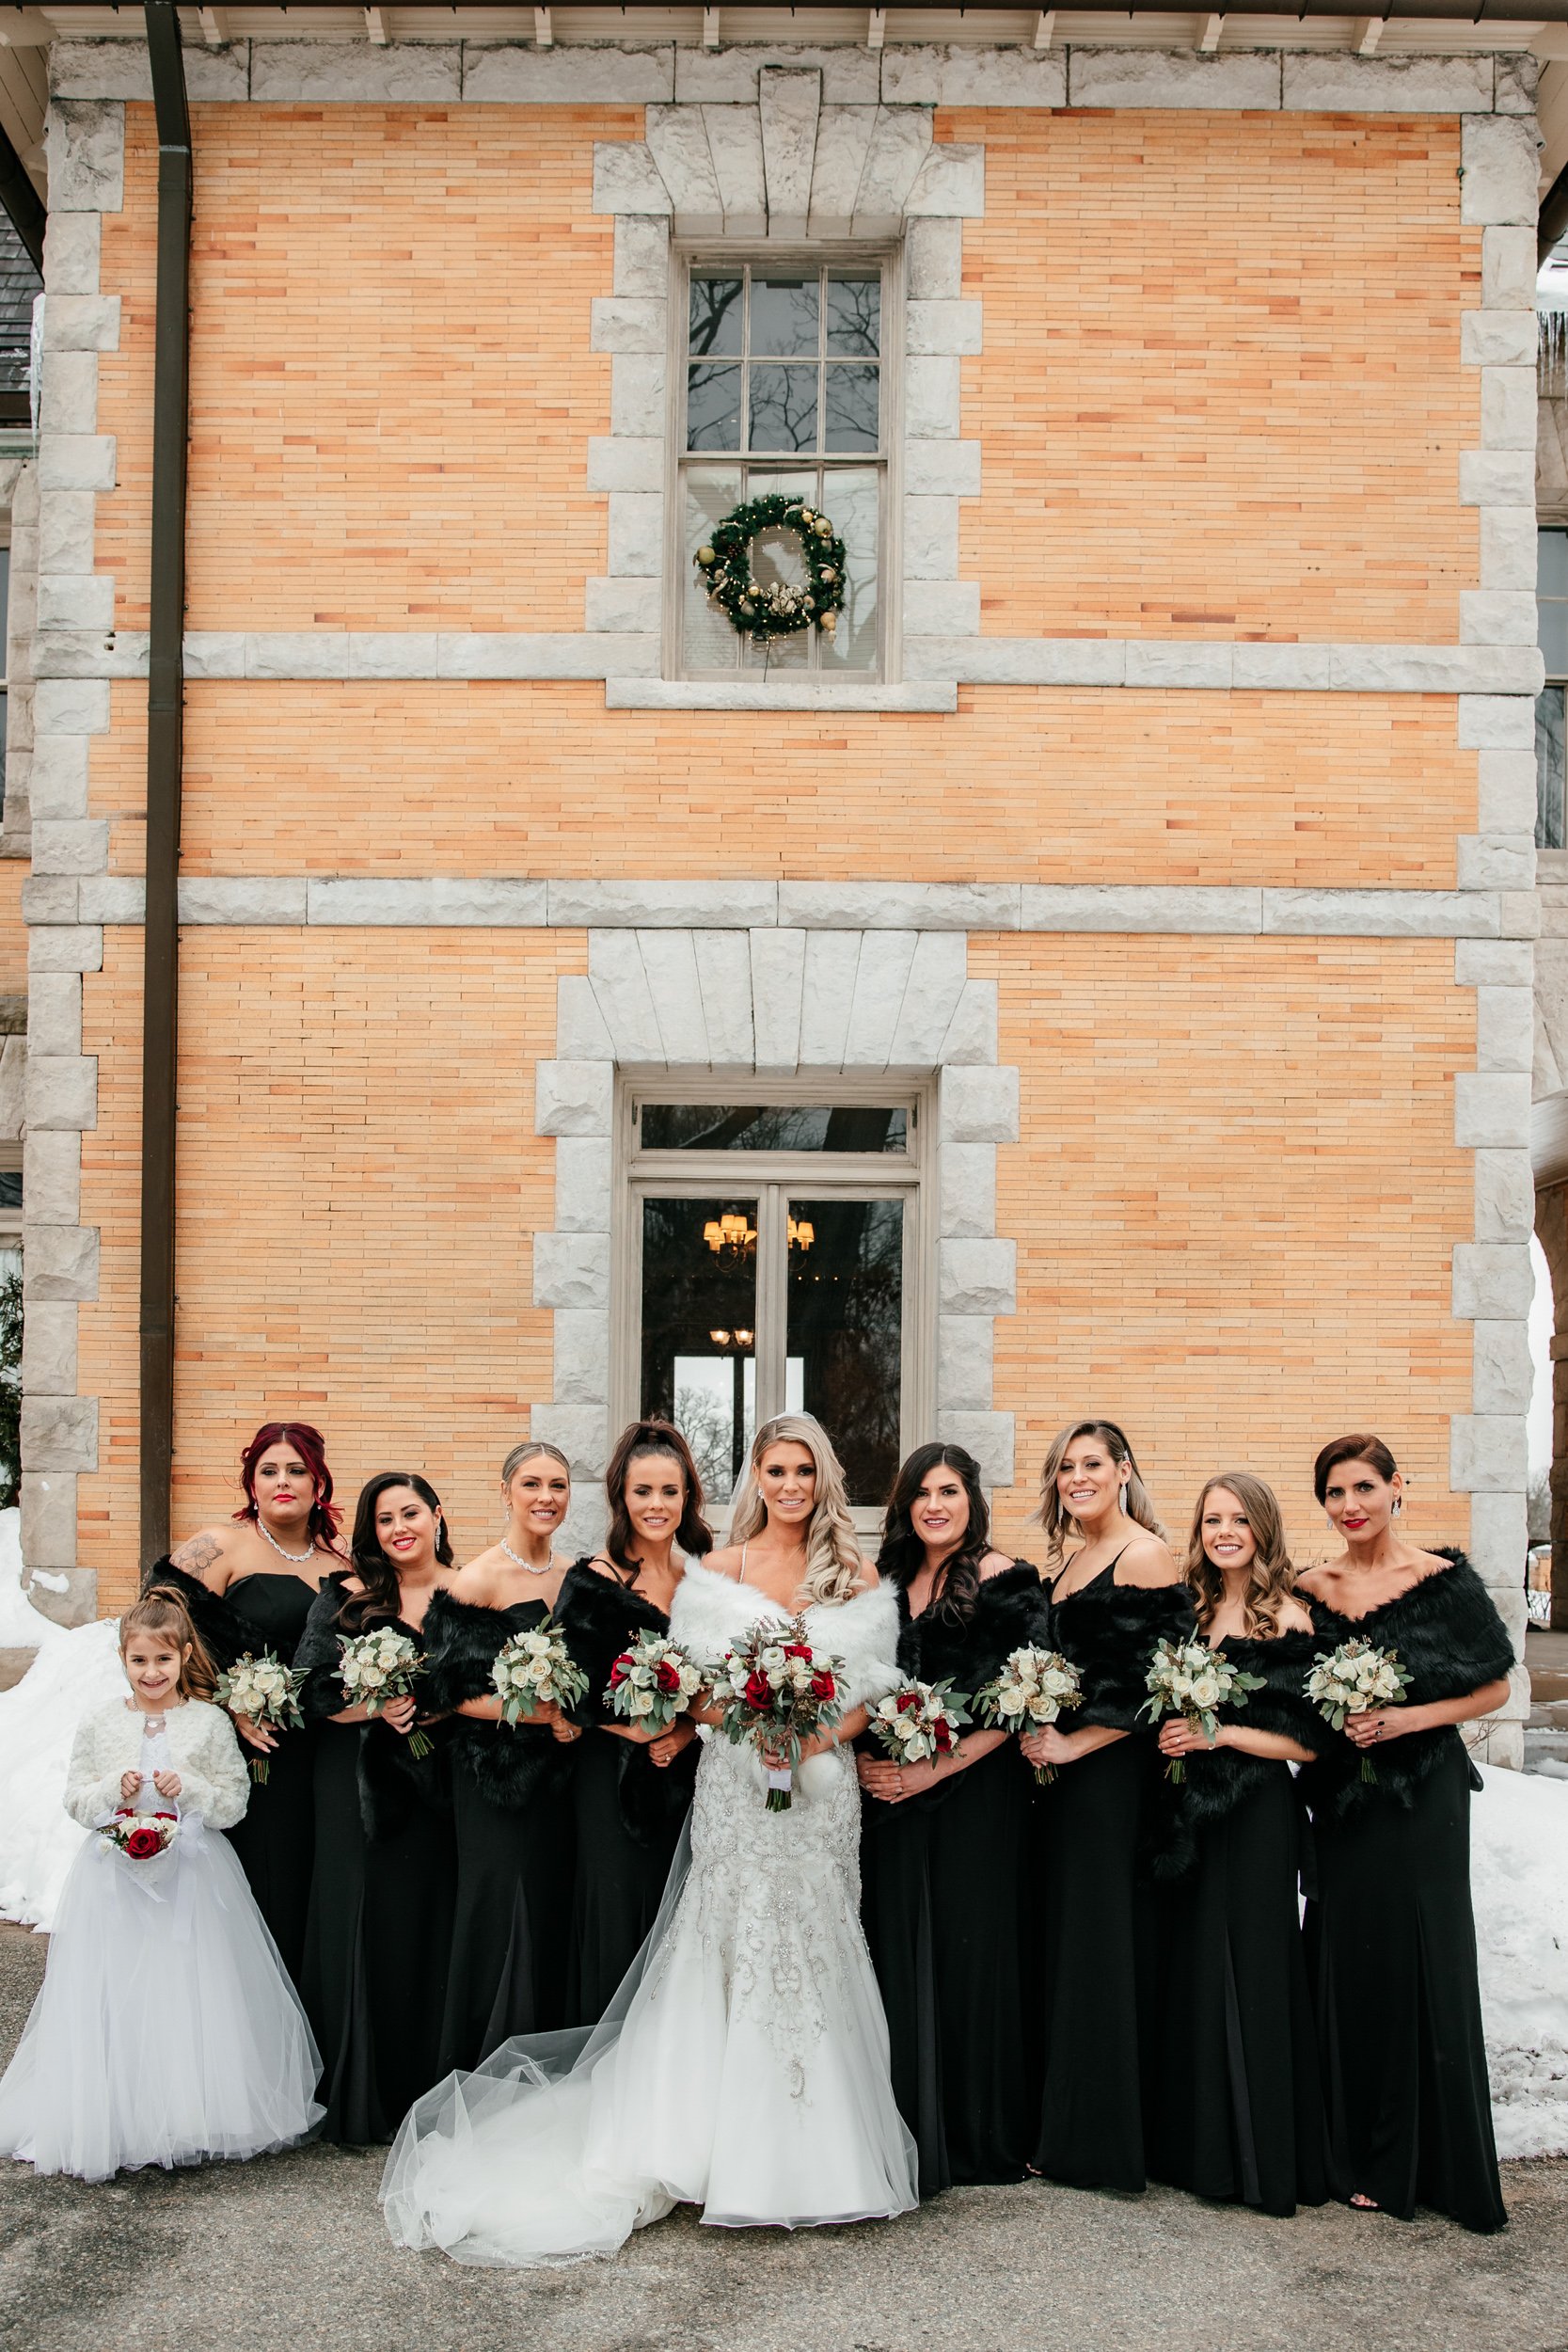 LUCEINS MANOR WEDDING PHOTOGRAPHY - FEB 2021 - 33.jpg